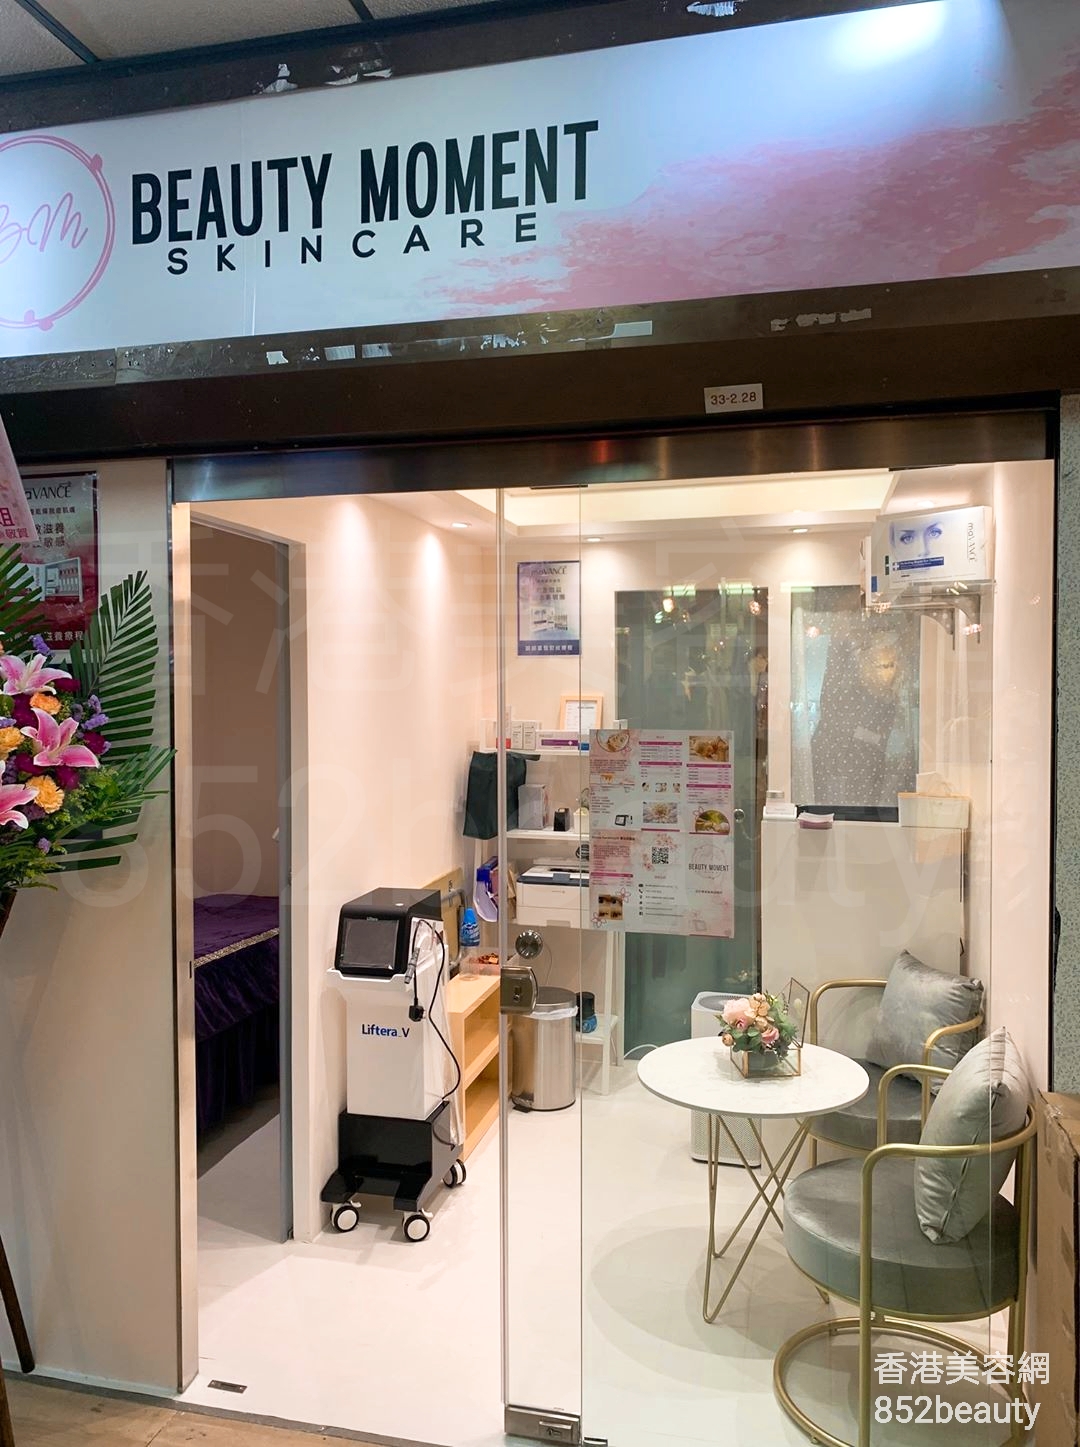 : Beauty Moment Skincare Centre